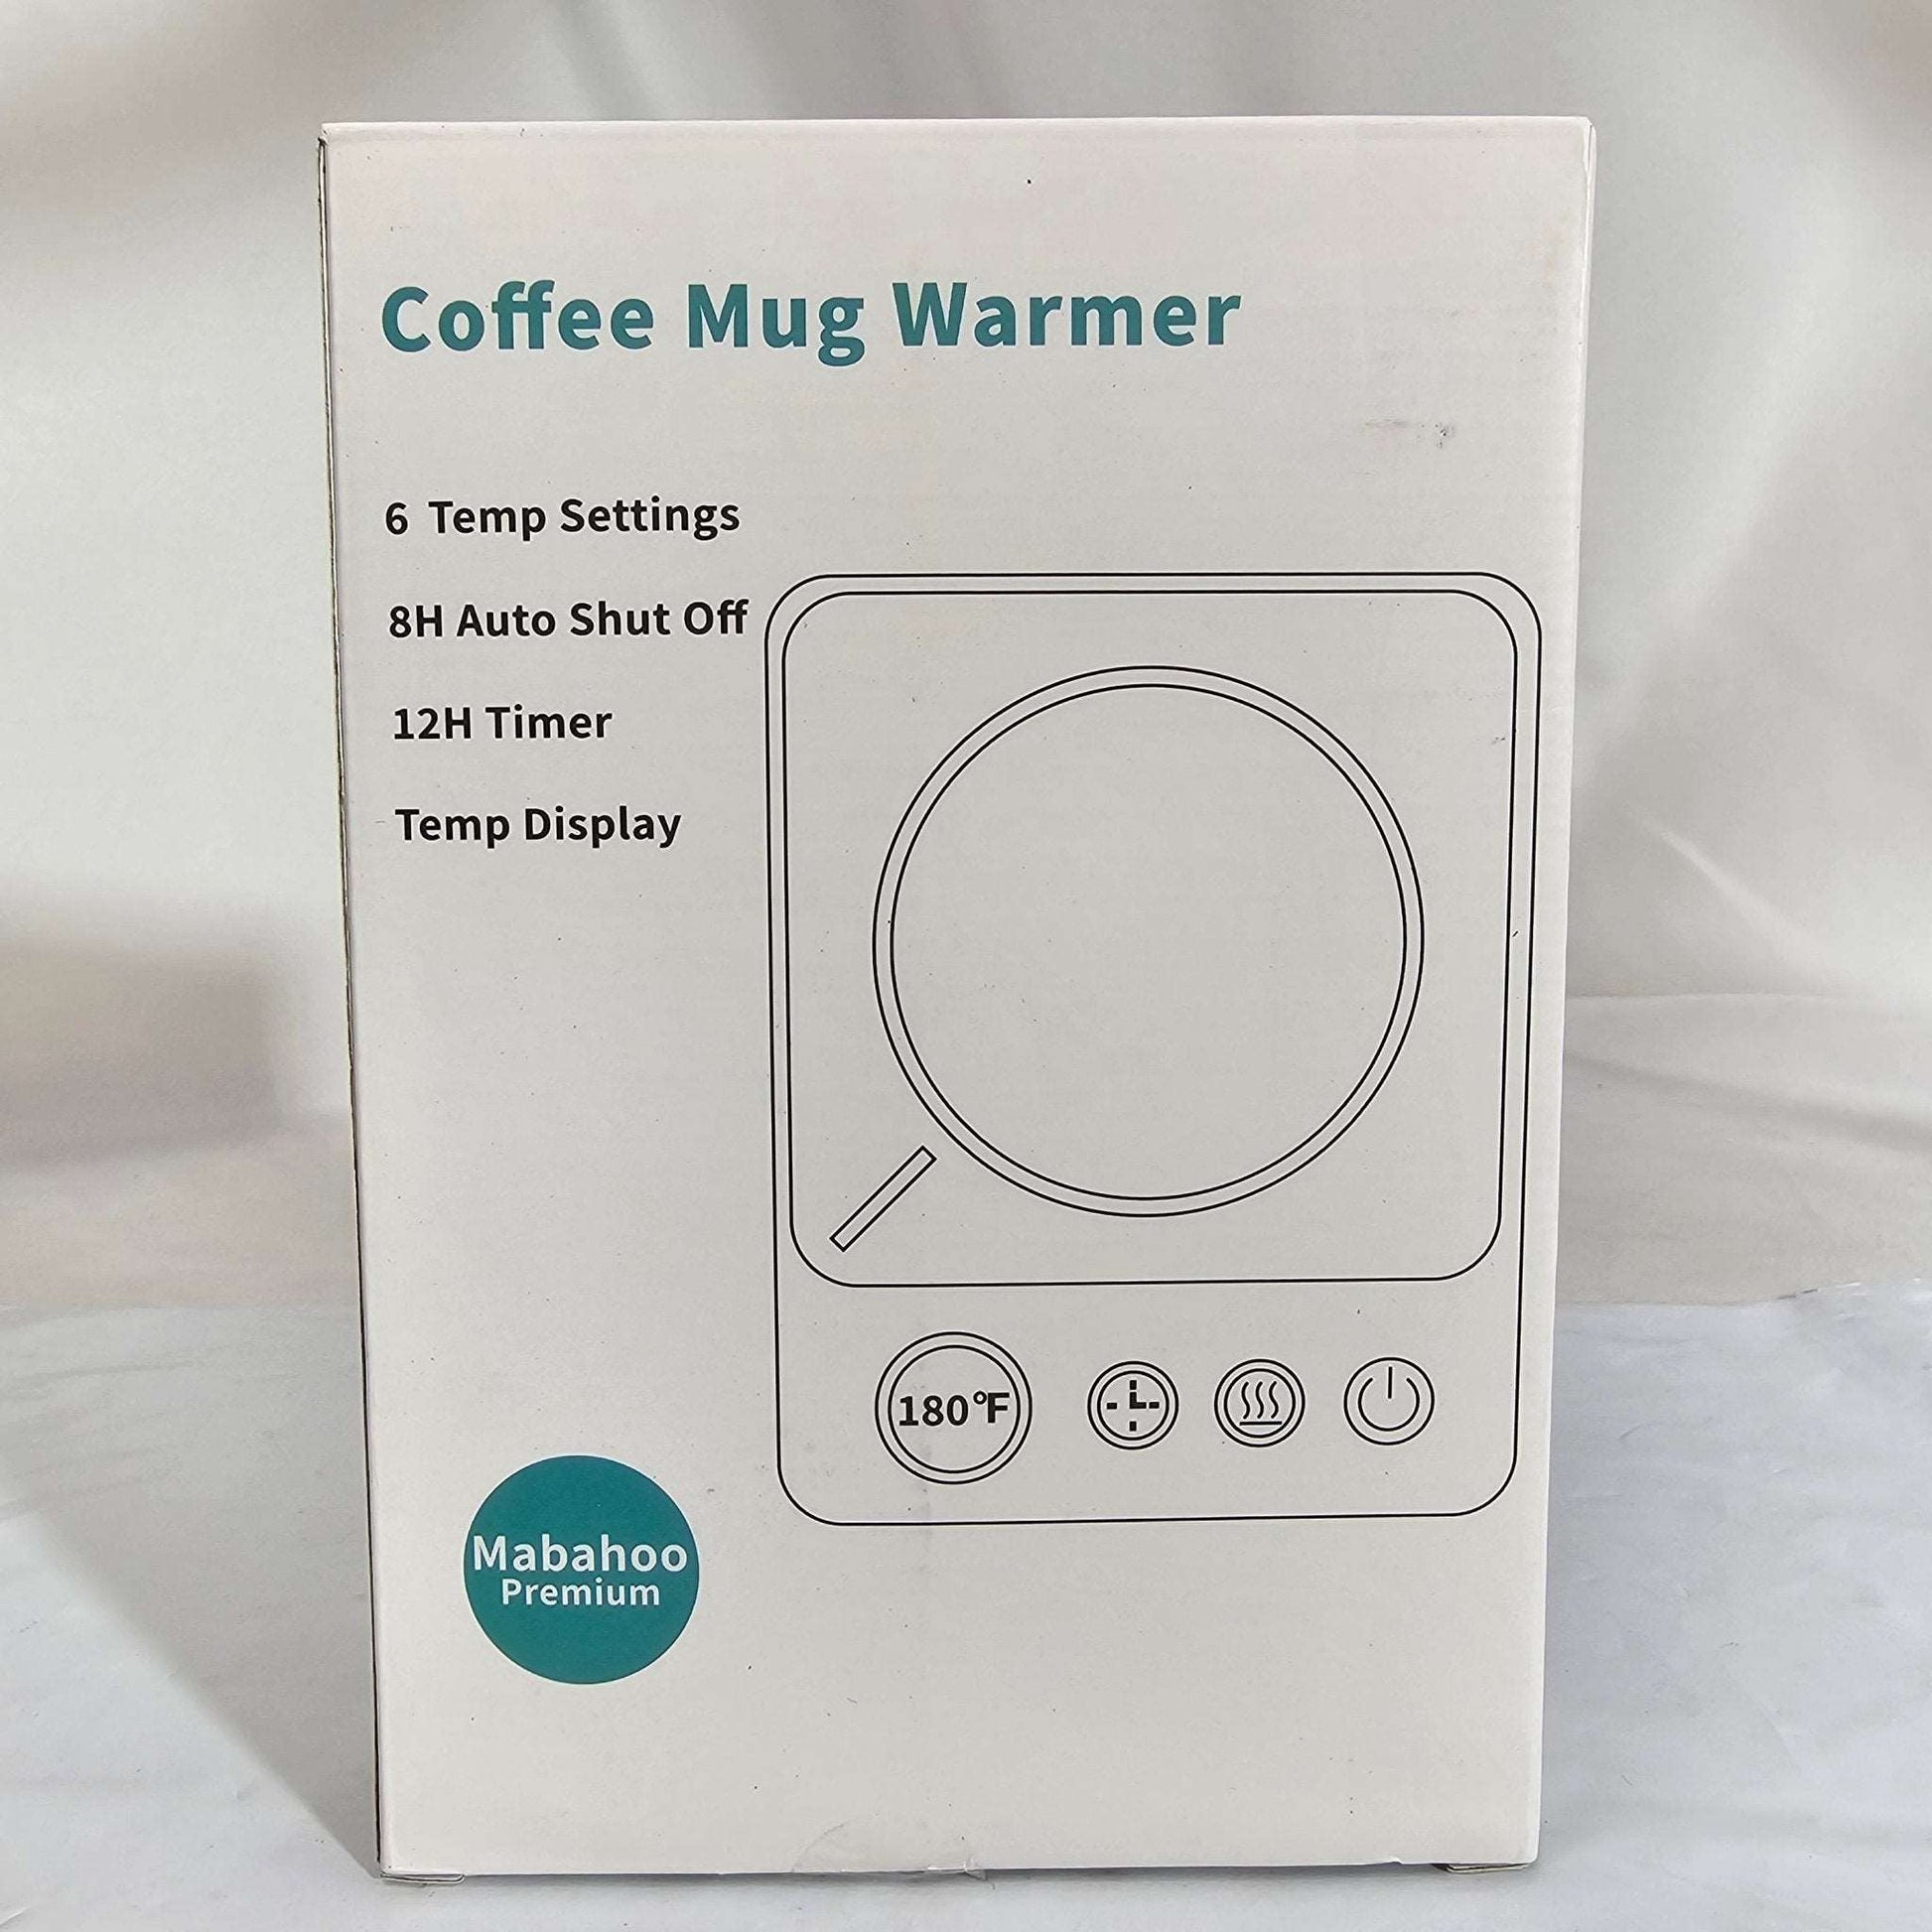 Coffee Mug Warmer Green Mabahoo - DQ Distribution